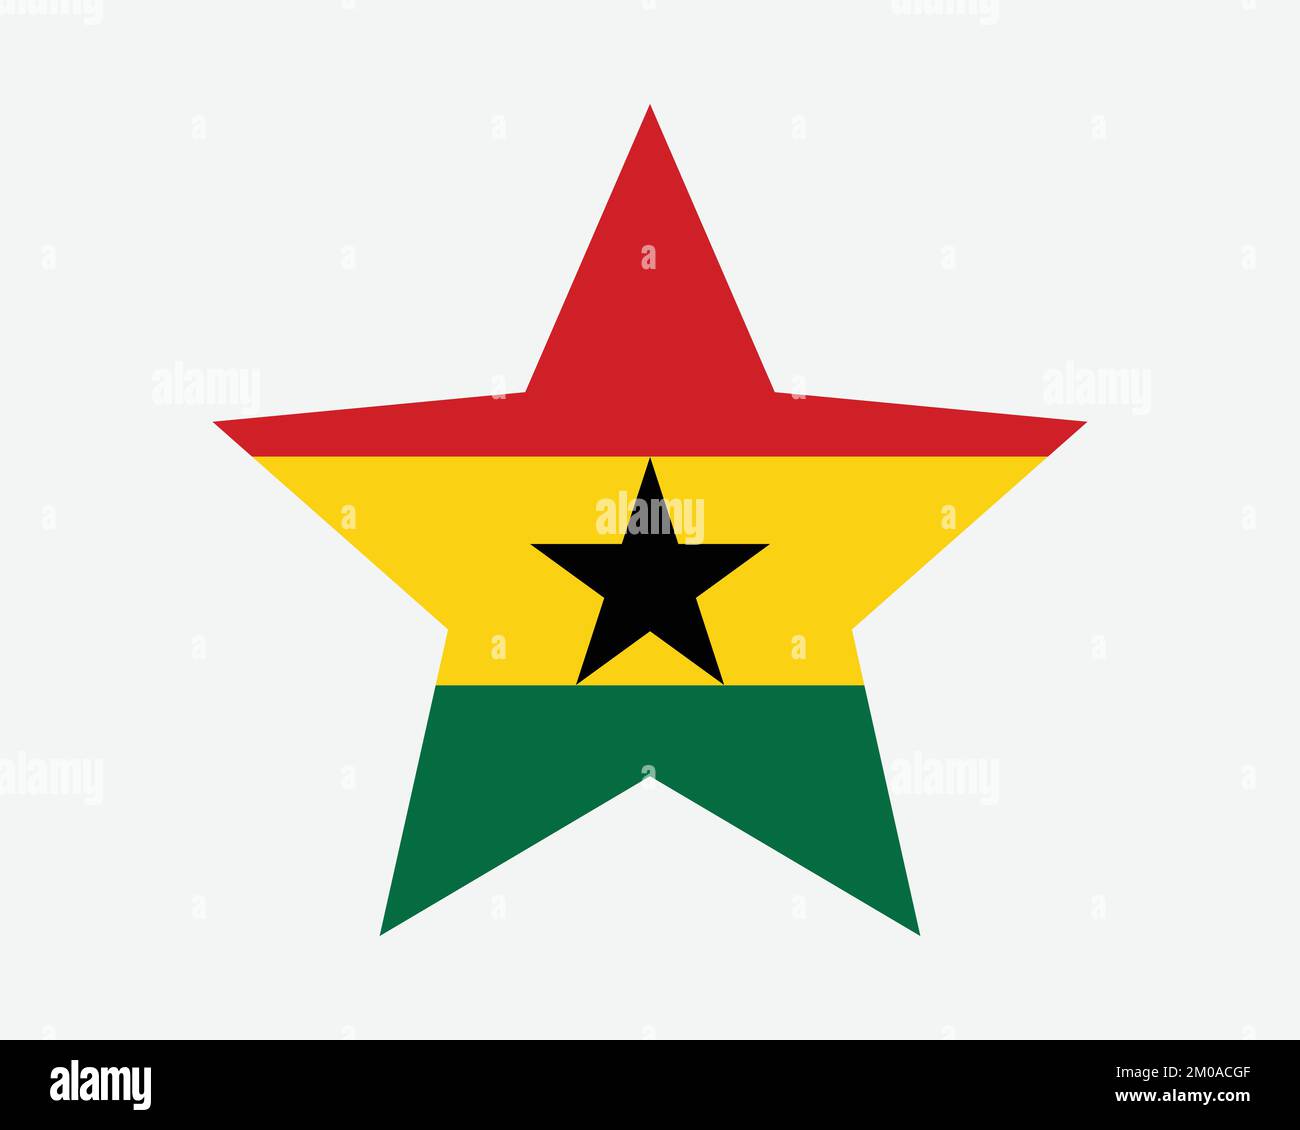 Ghana Star Flag. Ghanaian Star Shape Flag. Republic of Ghana Country National Banner Icon Symbol Vector Flat Artwork Graphic Illustration Stock Vector